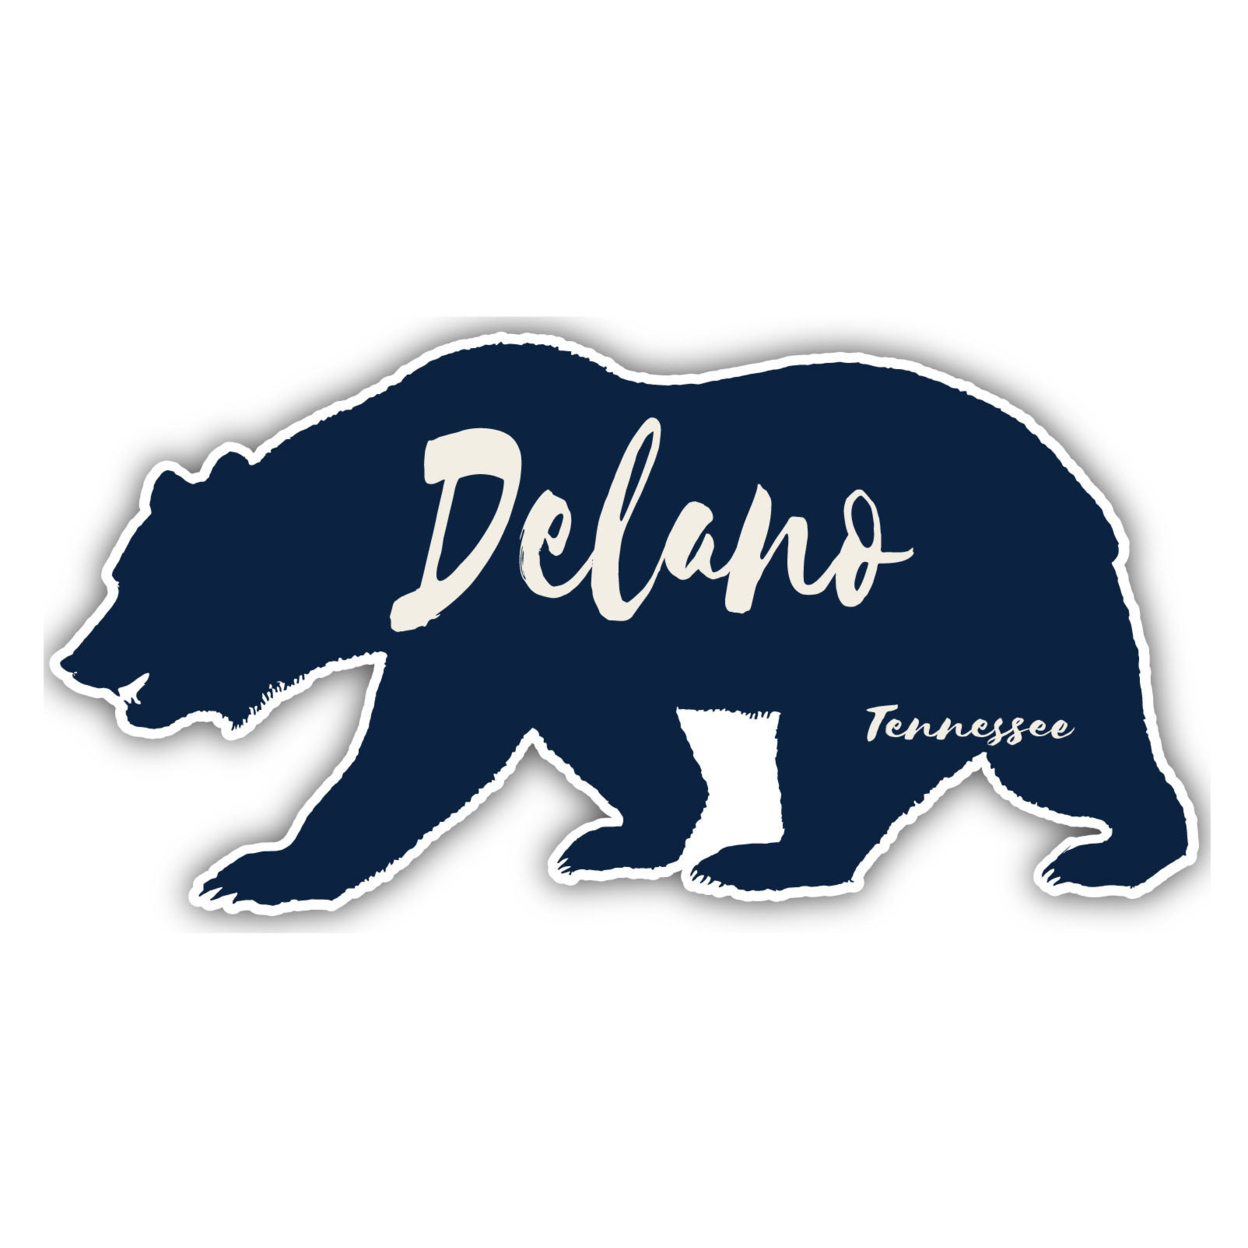 Delano Tennessee Souvenir Decorative Stickers (Choose Theme And Size) - Single Unit, 6-Inch, Bear